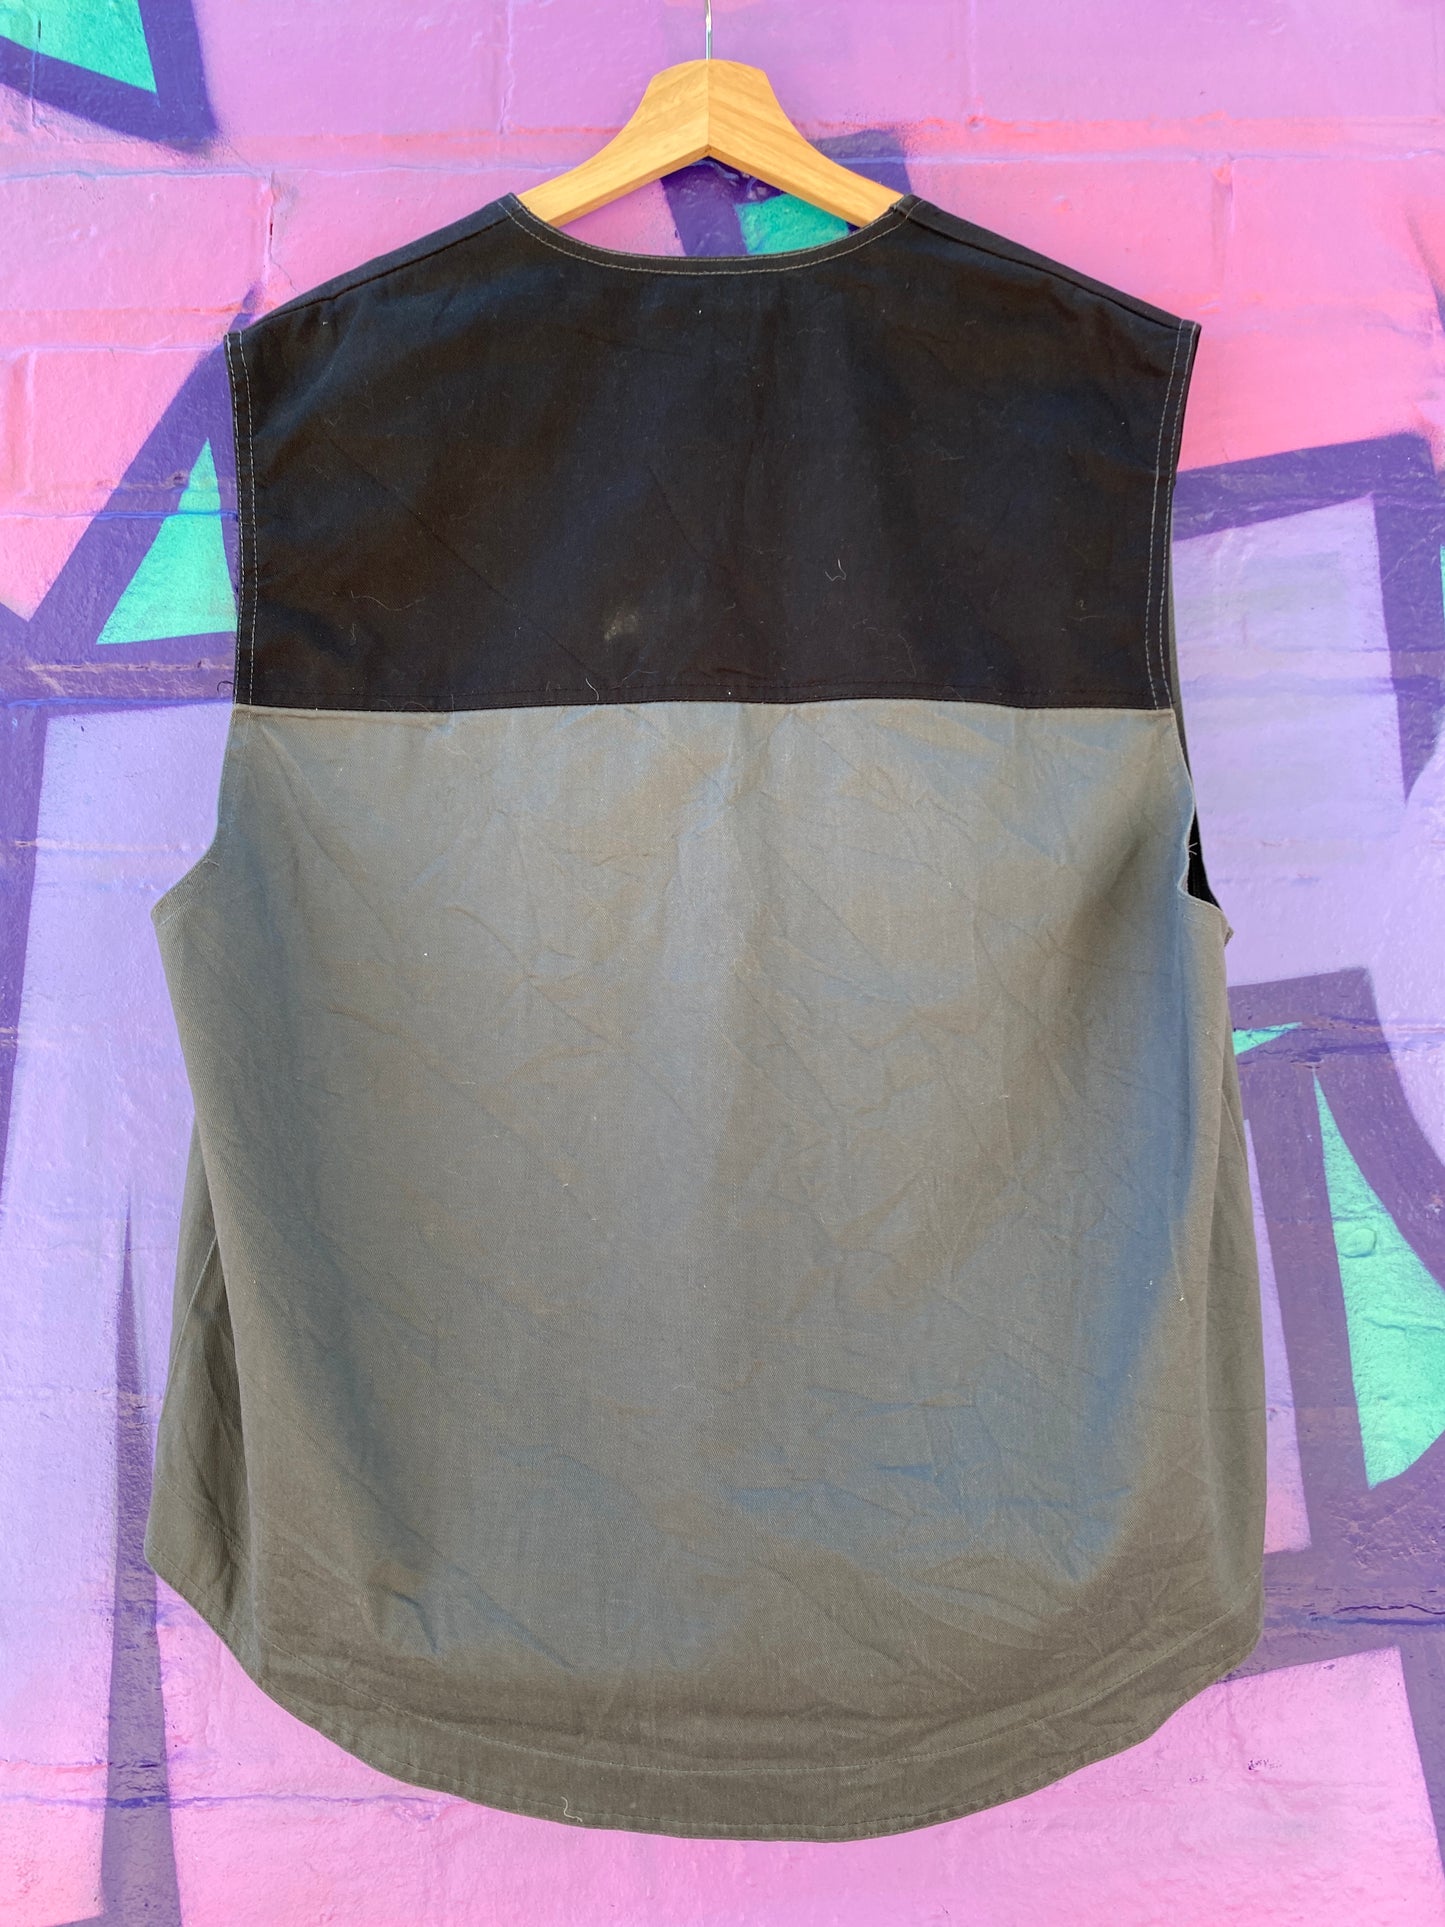 L - Toptex Grey/Black Work Vest